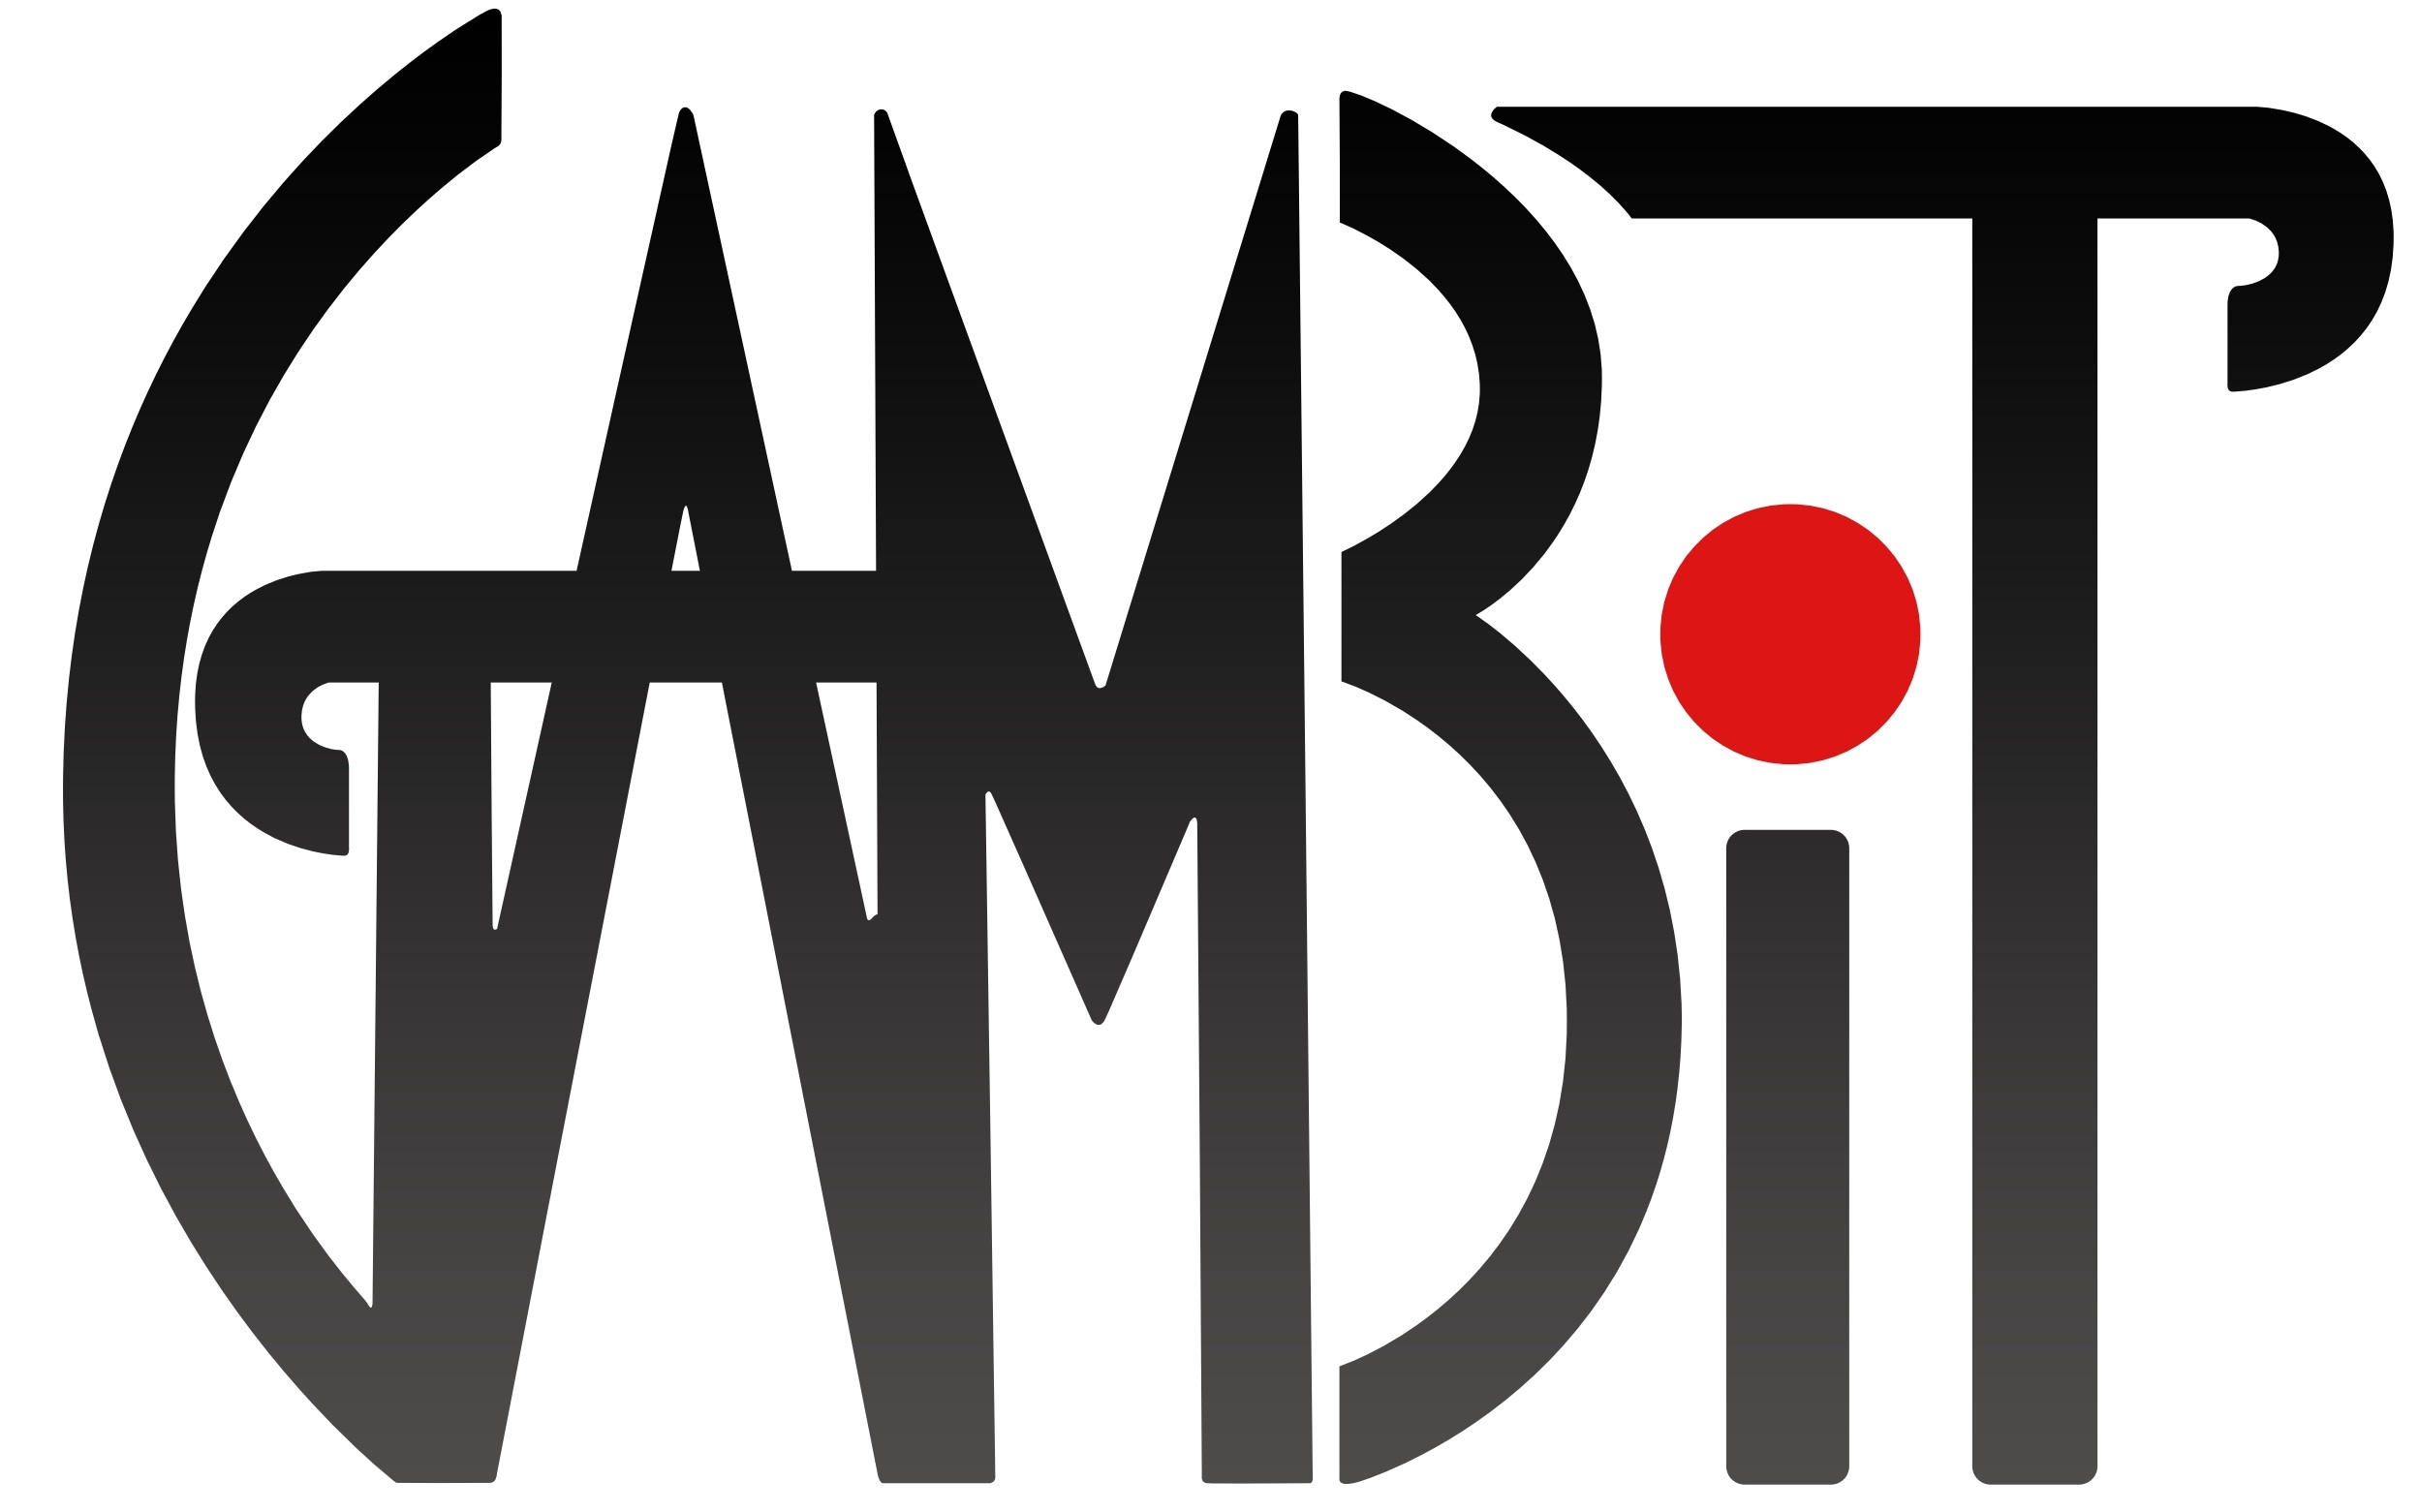 GAMBIT Logo.jpg 1c9fb345f67608a074c4e3e7db520003